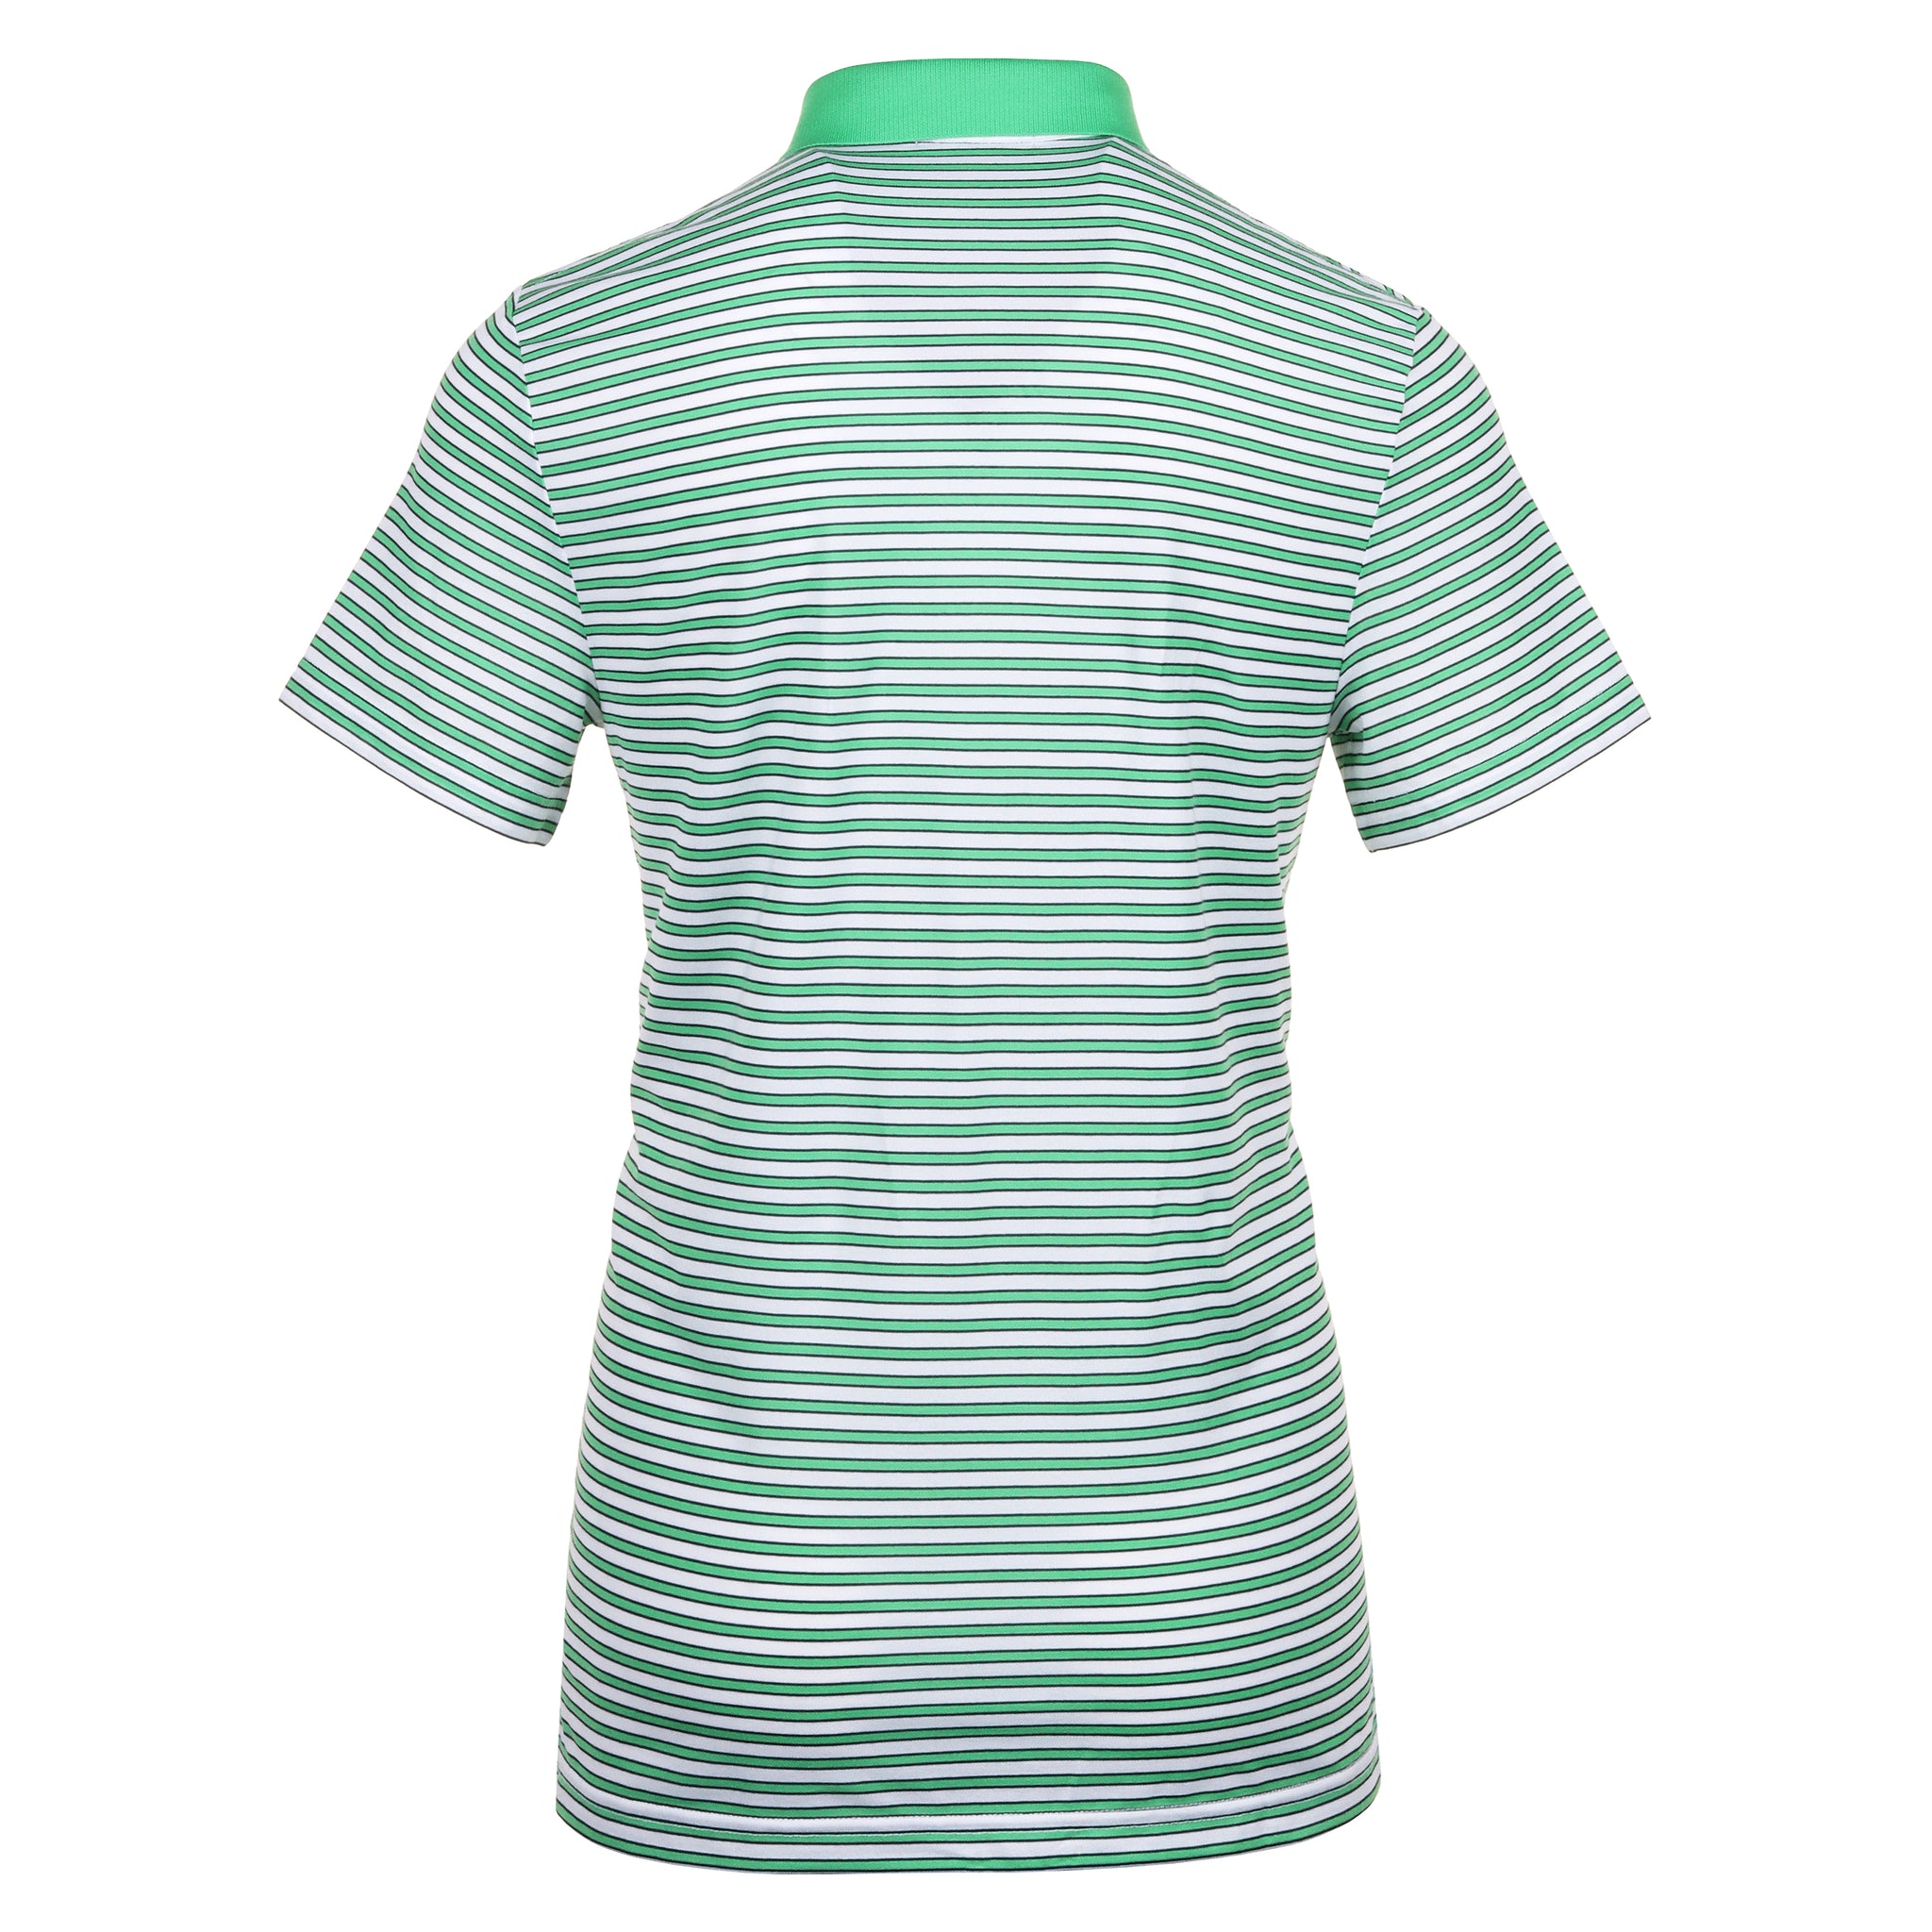 RLX Ralph Lauren Tour Stripe Pique Polo Shirt